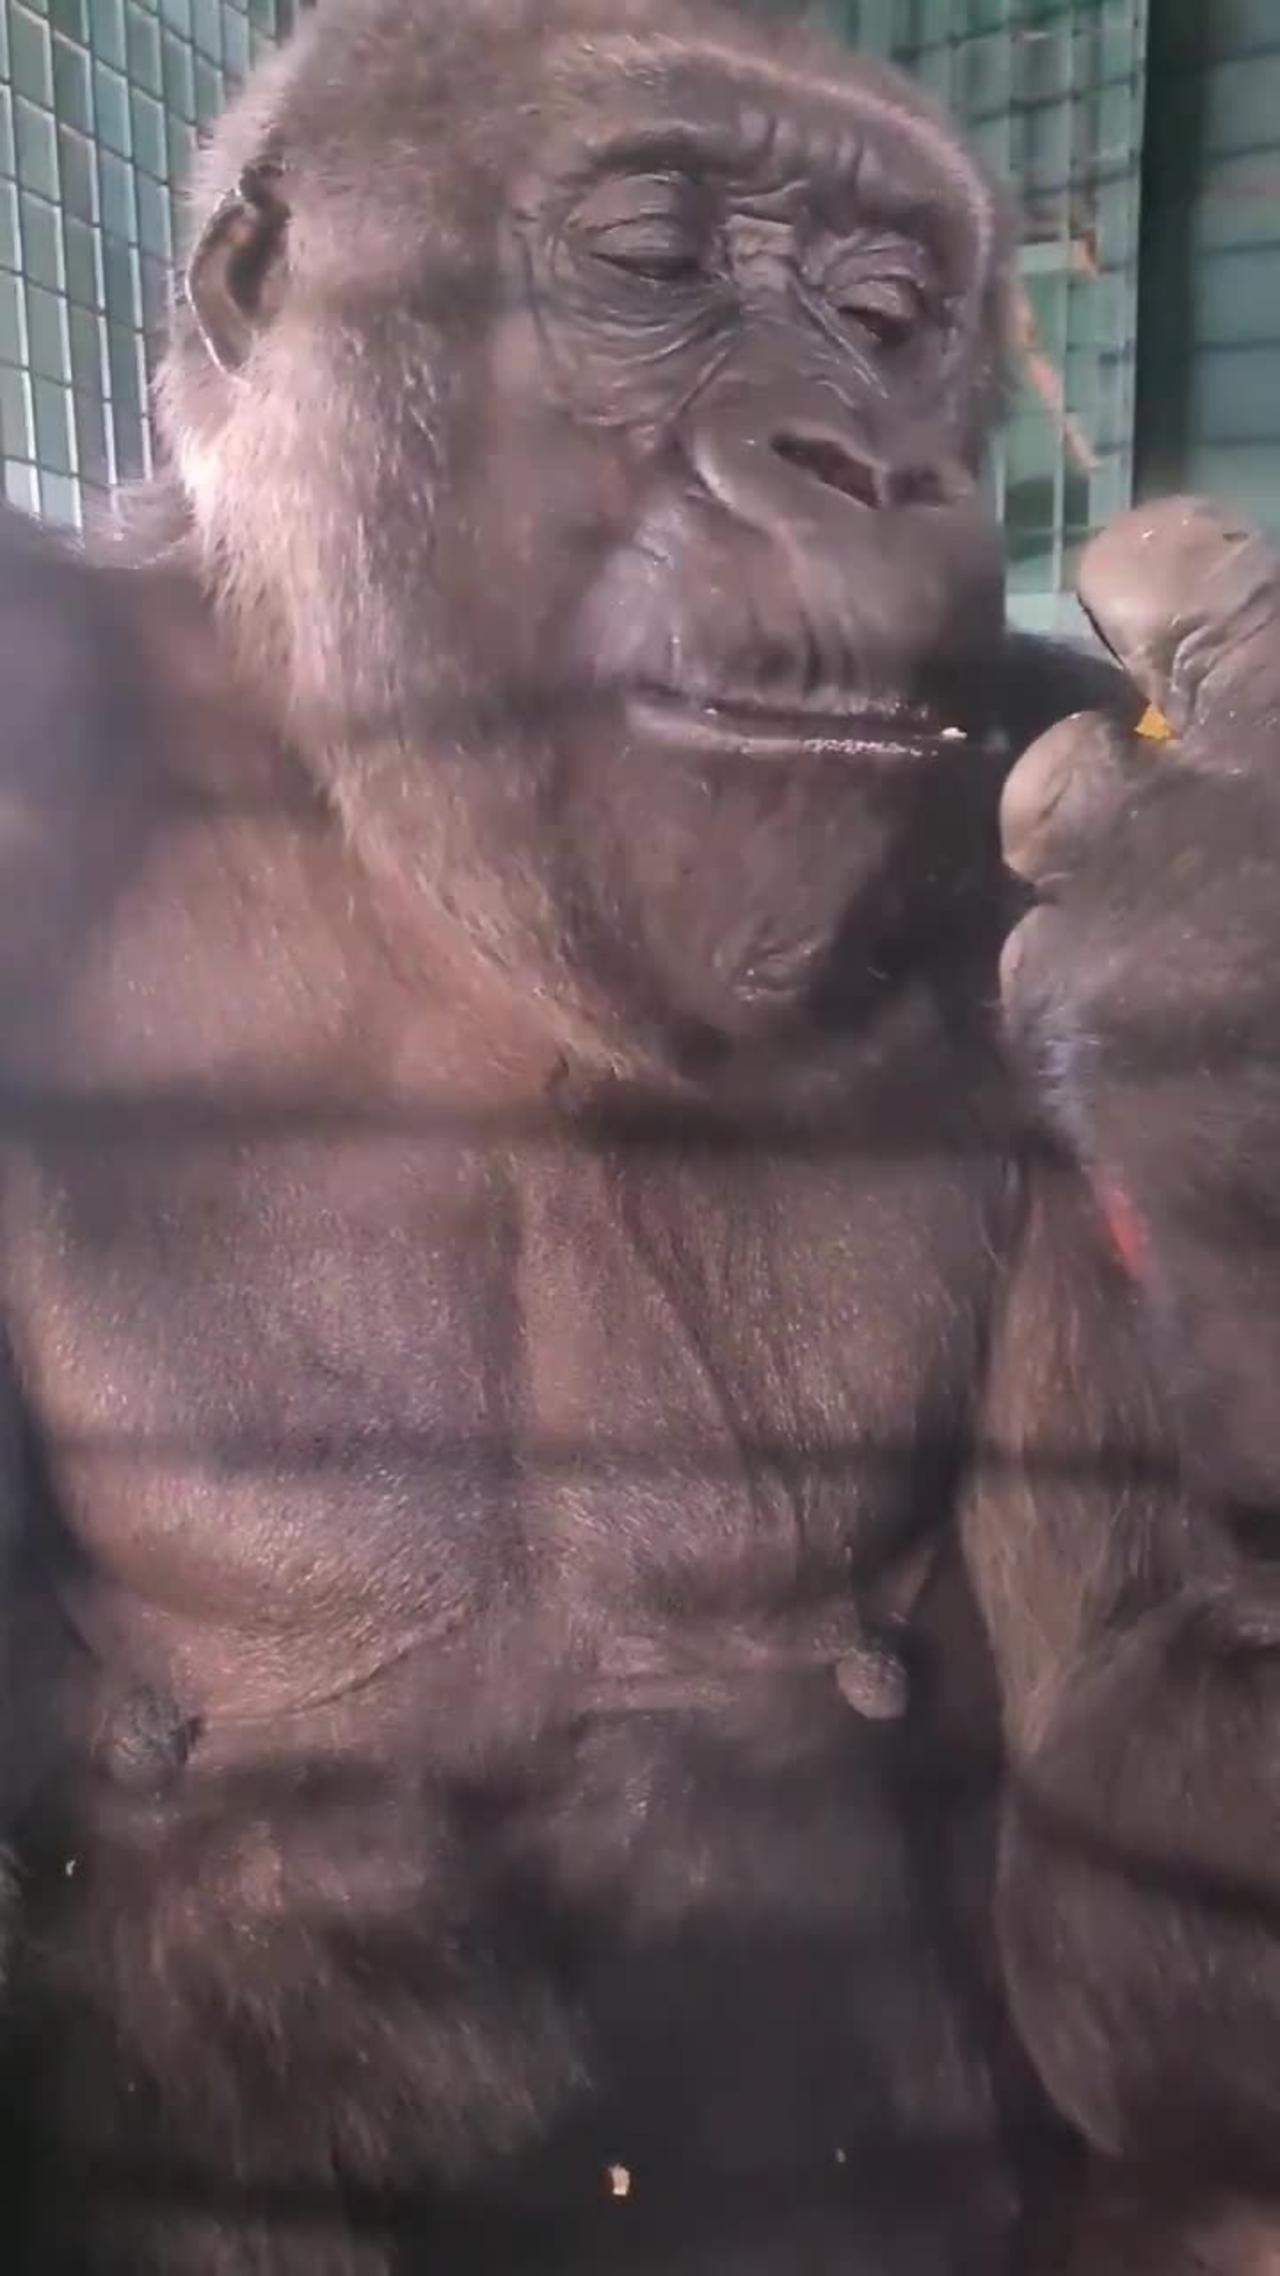 Gorilla eating, extra crunchy! #gorilla #eating #asmr #satisfying